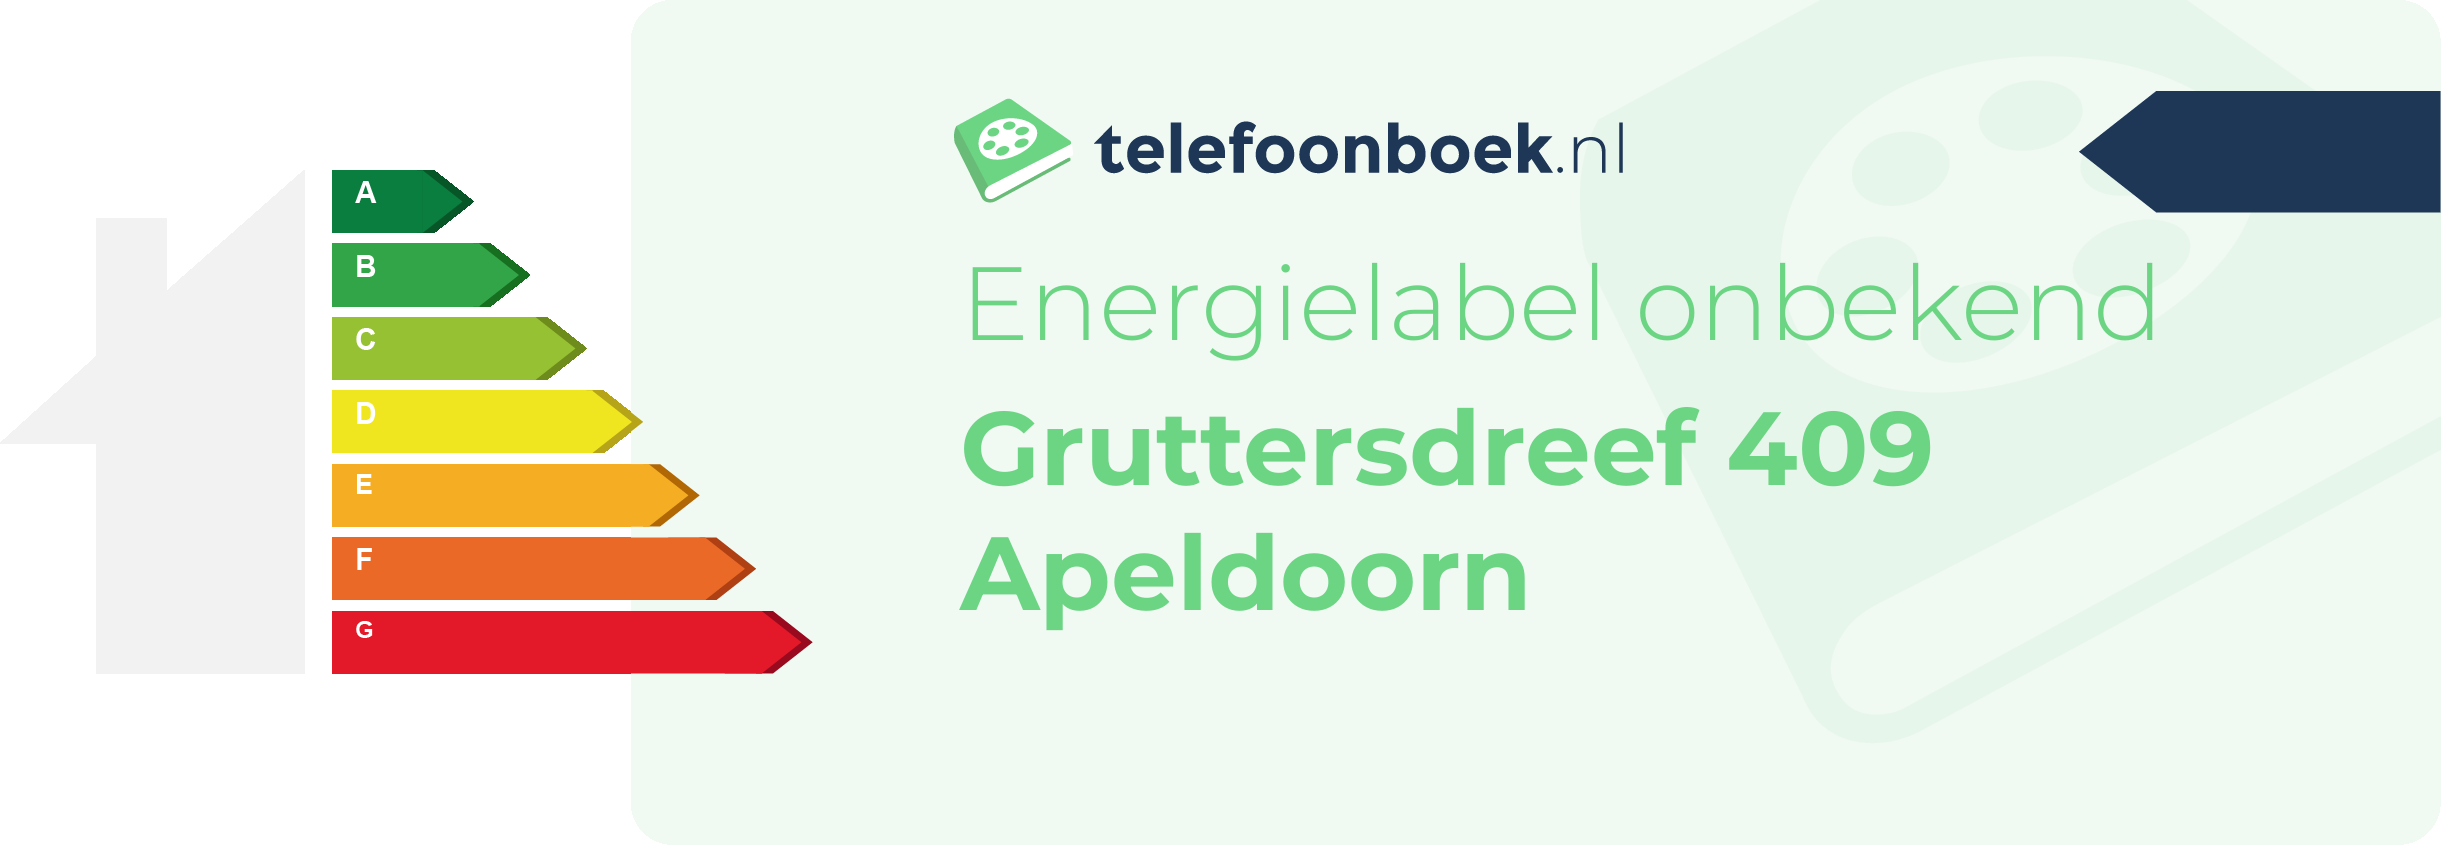 Energielabel Gruttersdreef 409 Apeldoorn